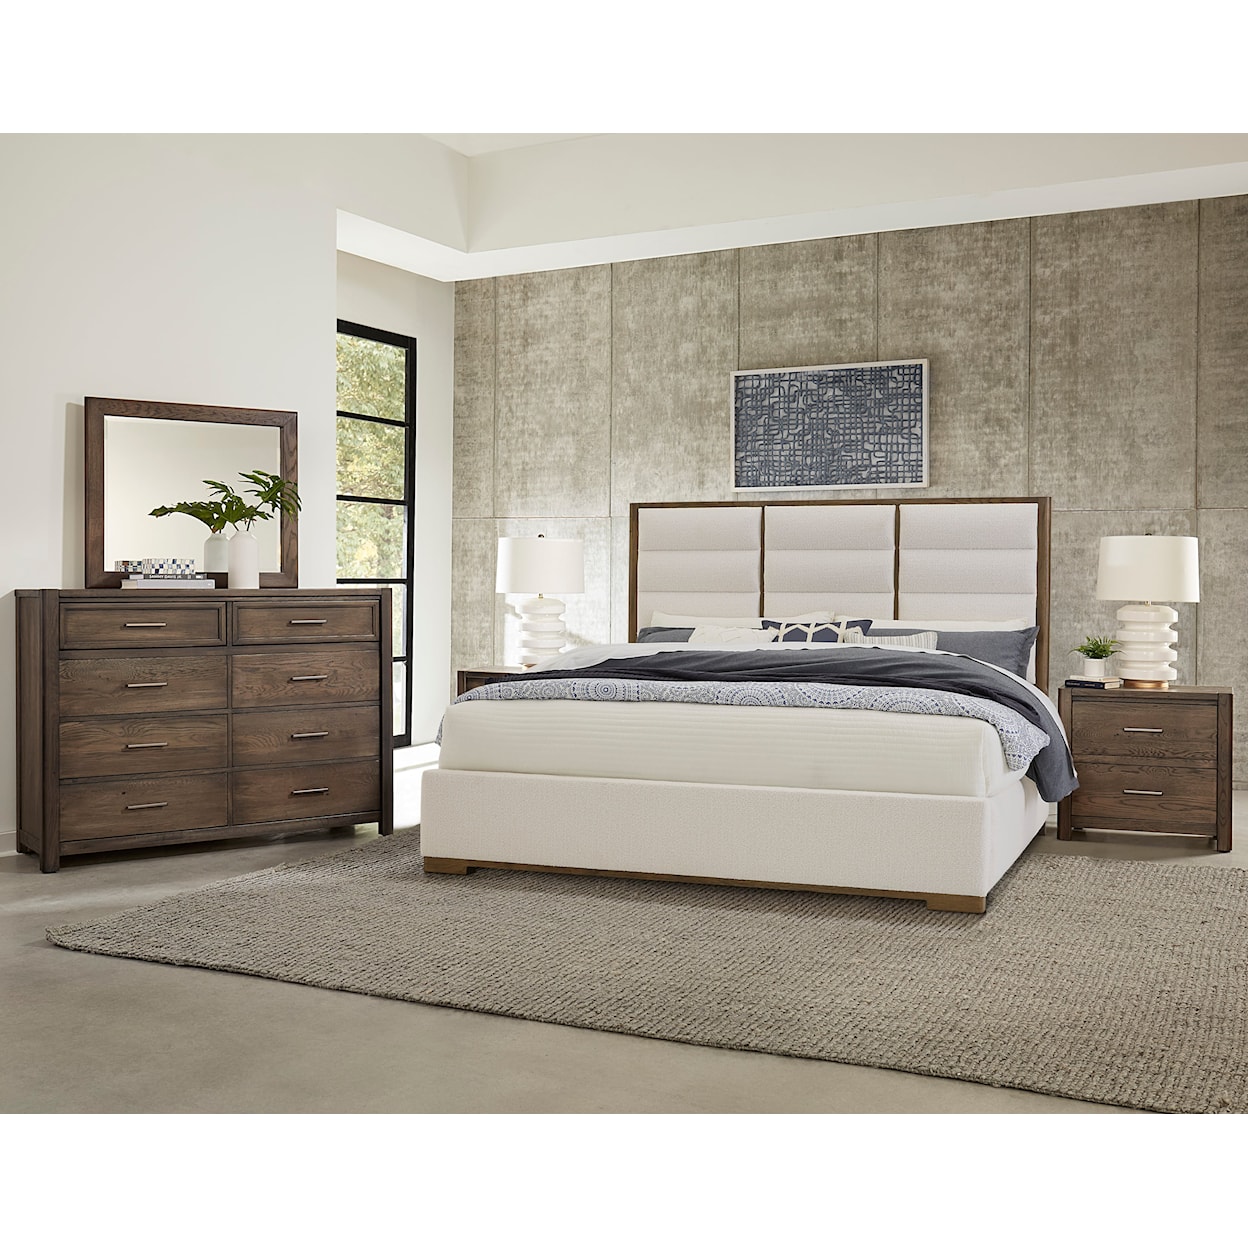 Vaughan Bassett Crafted Oak - Aged Grey Upholstered Queen Bedroom Set